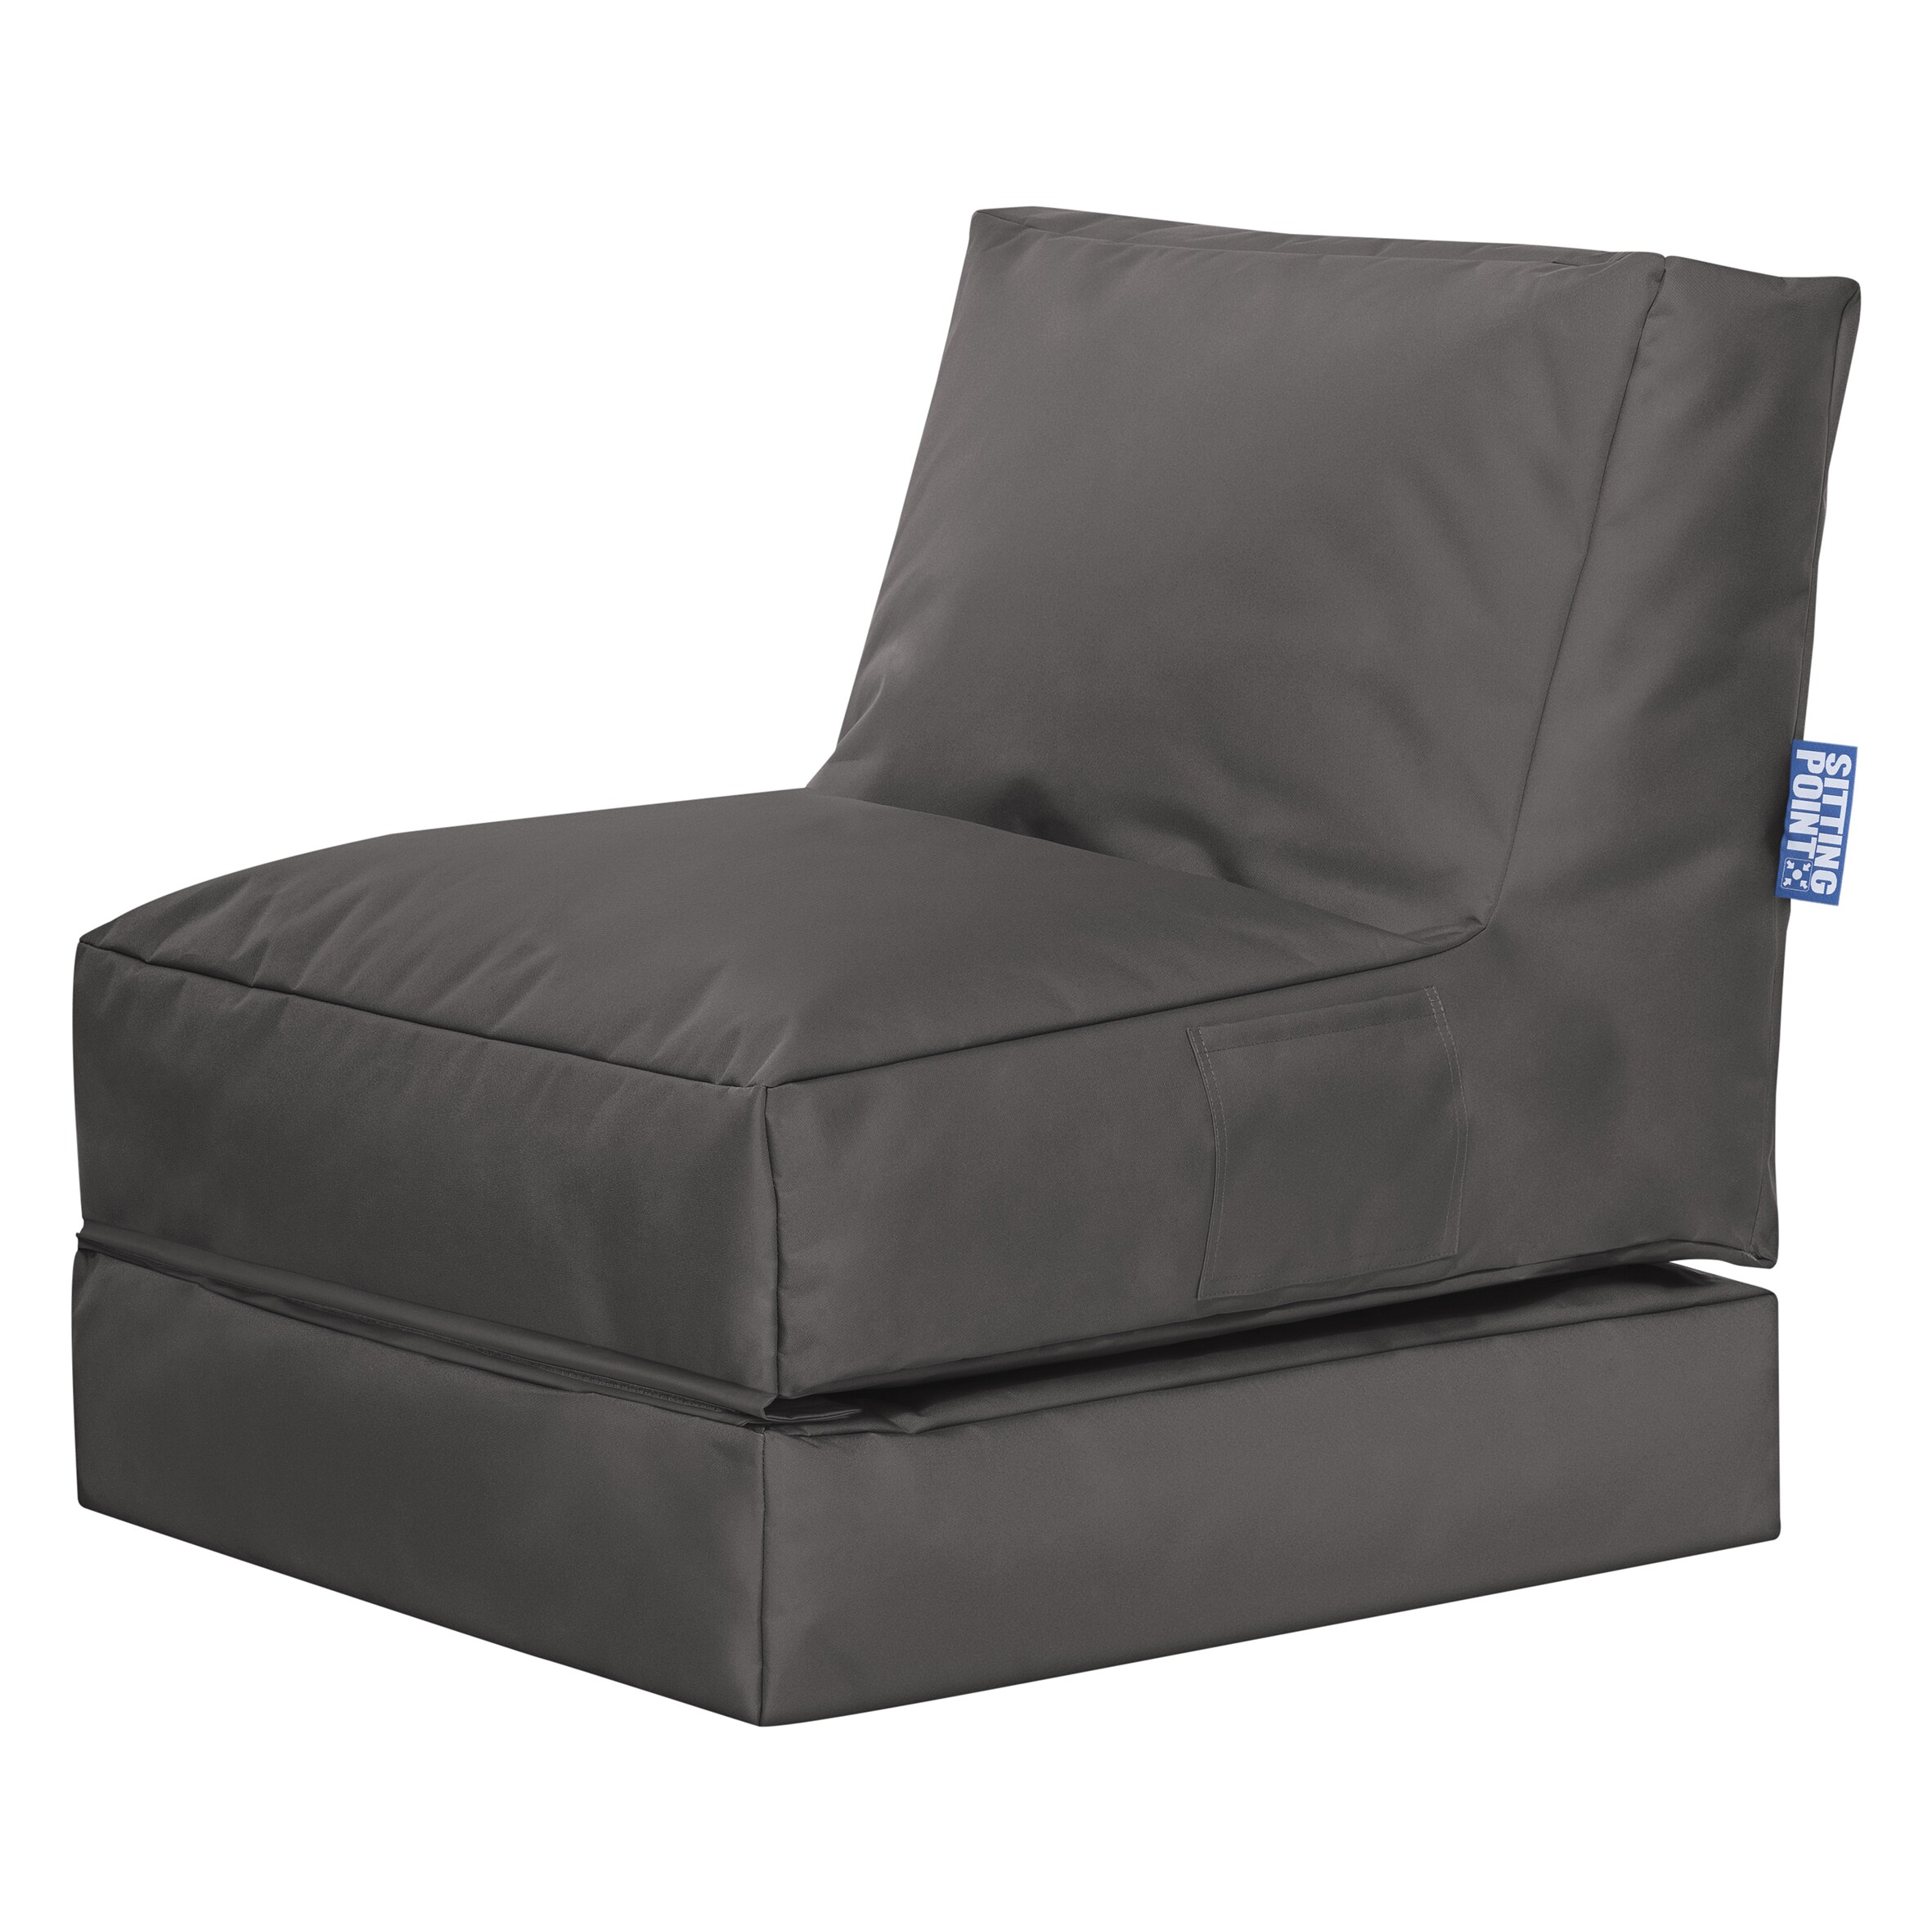 Sitting Point Twist Brava Lounge - Chair Bed - 12271703 Bath Bean & On Sale Bag - Beyond